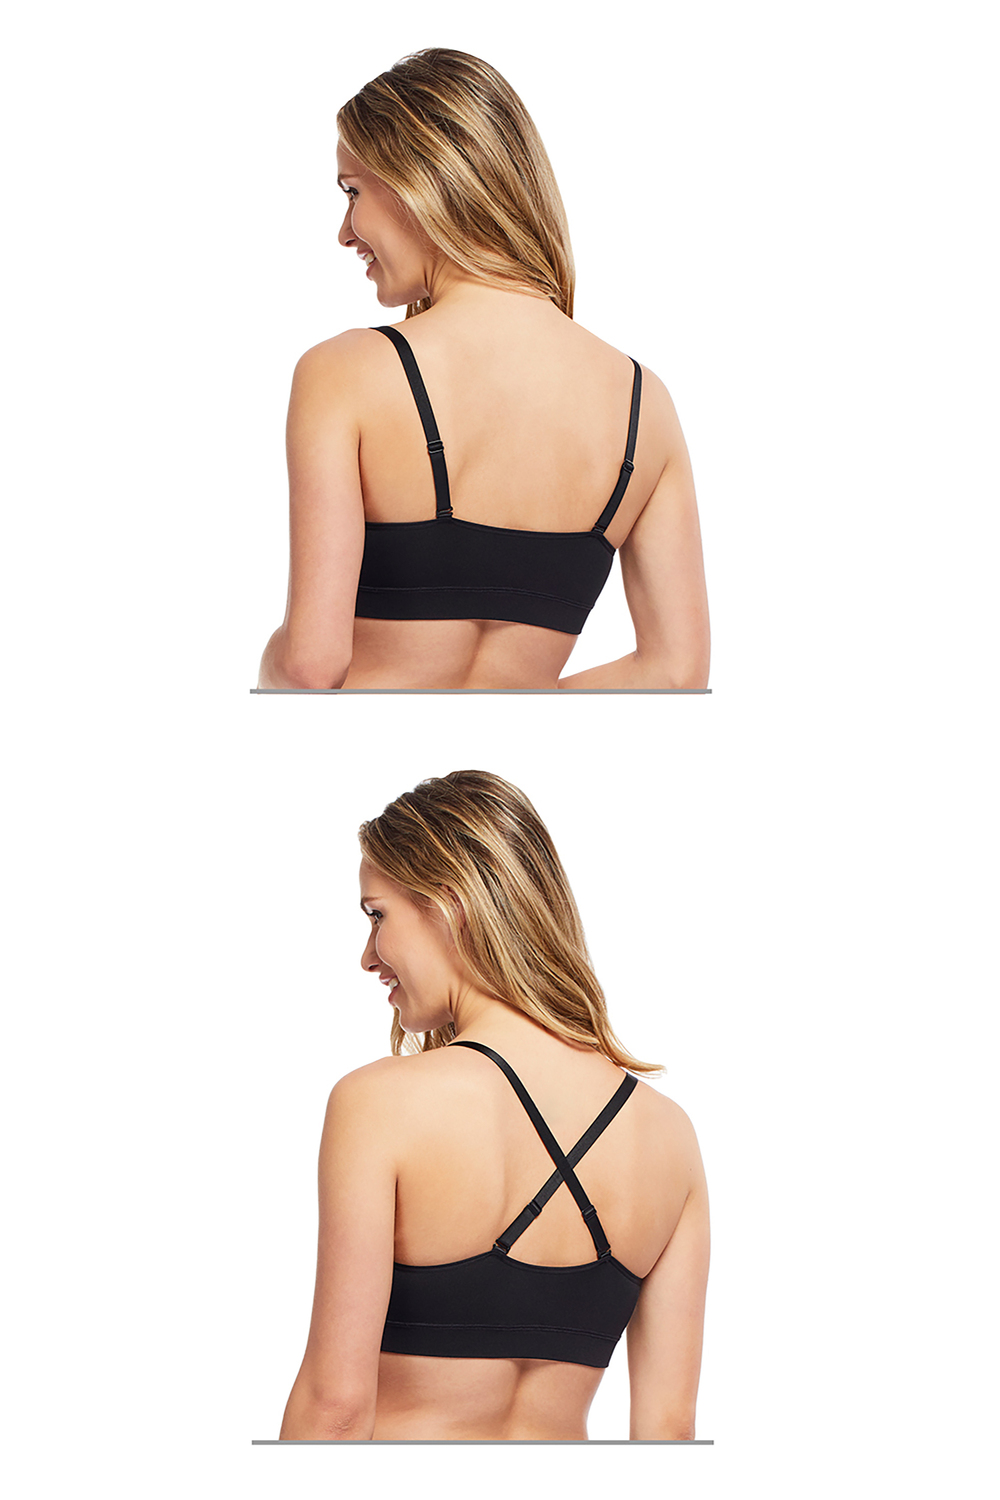 SOOMLON No Wire Bras for Women Fixed Shoulder Strap Daily Comfort Bra  Summer Bra Comfortable Bras Black L